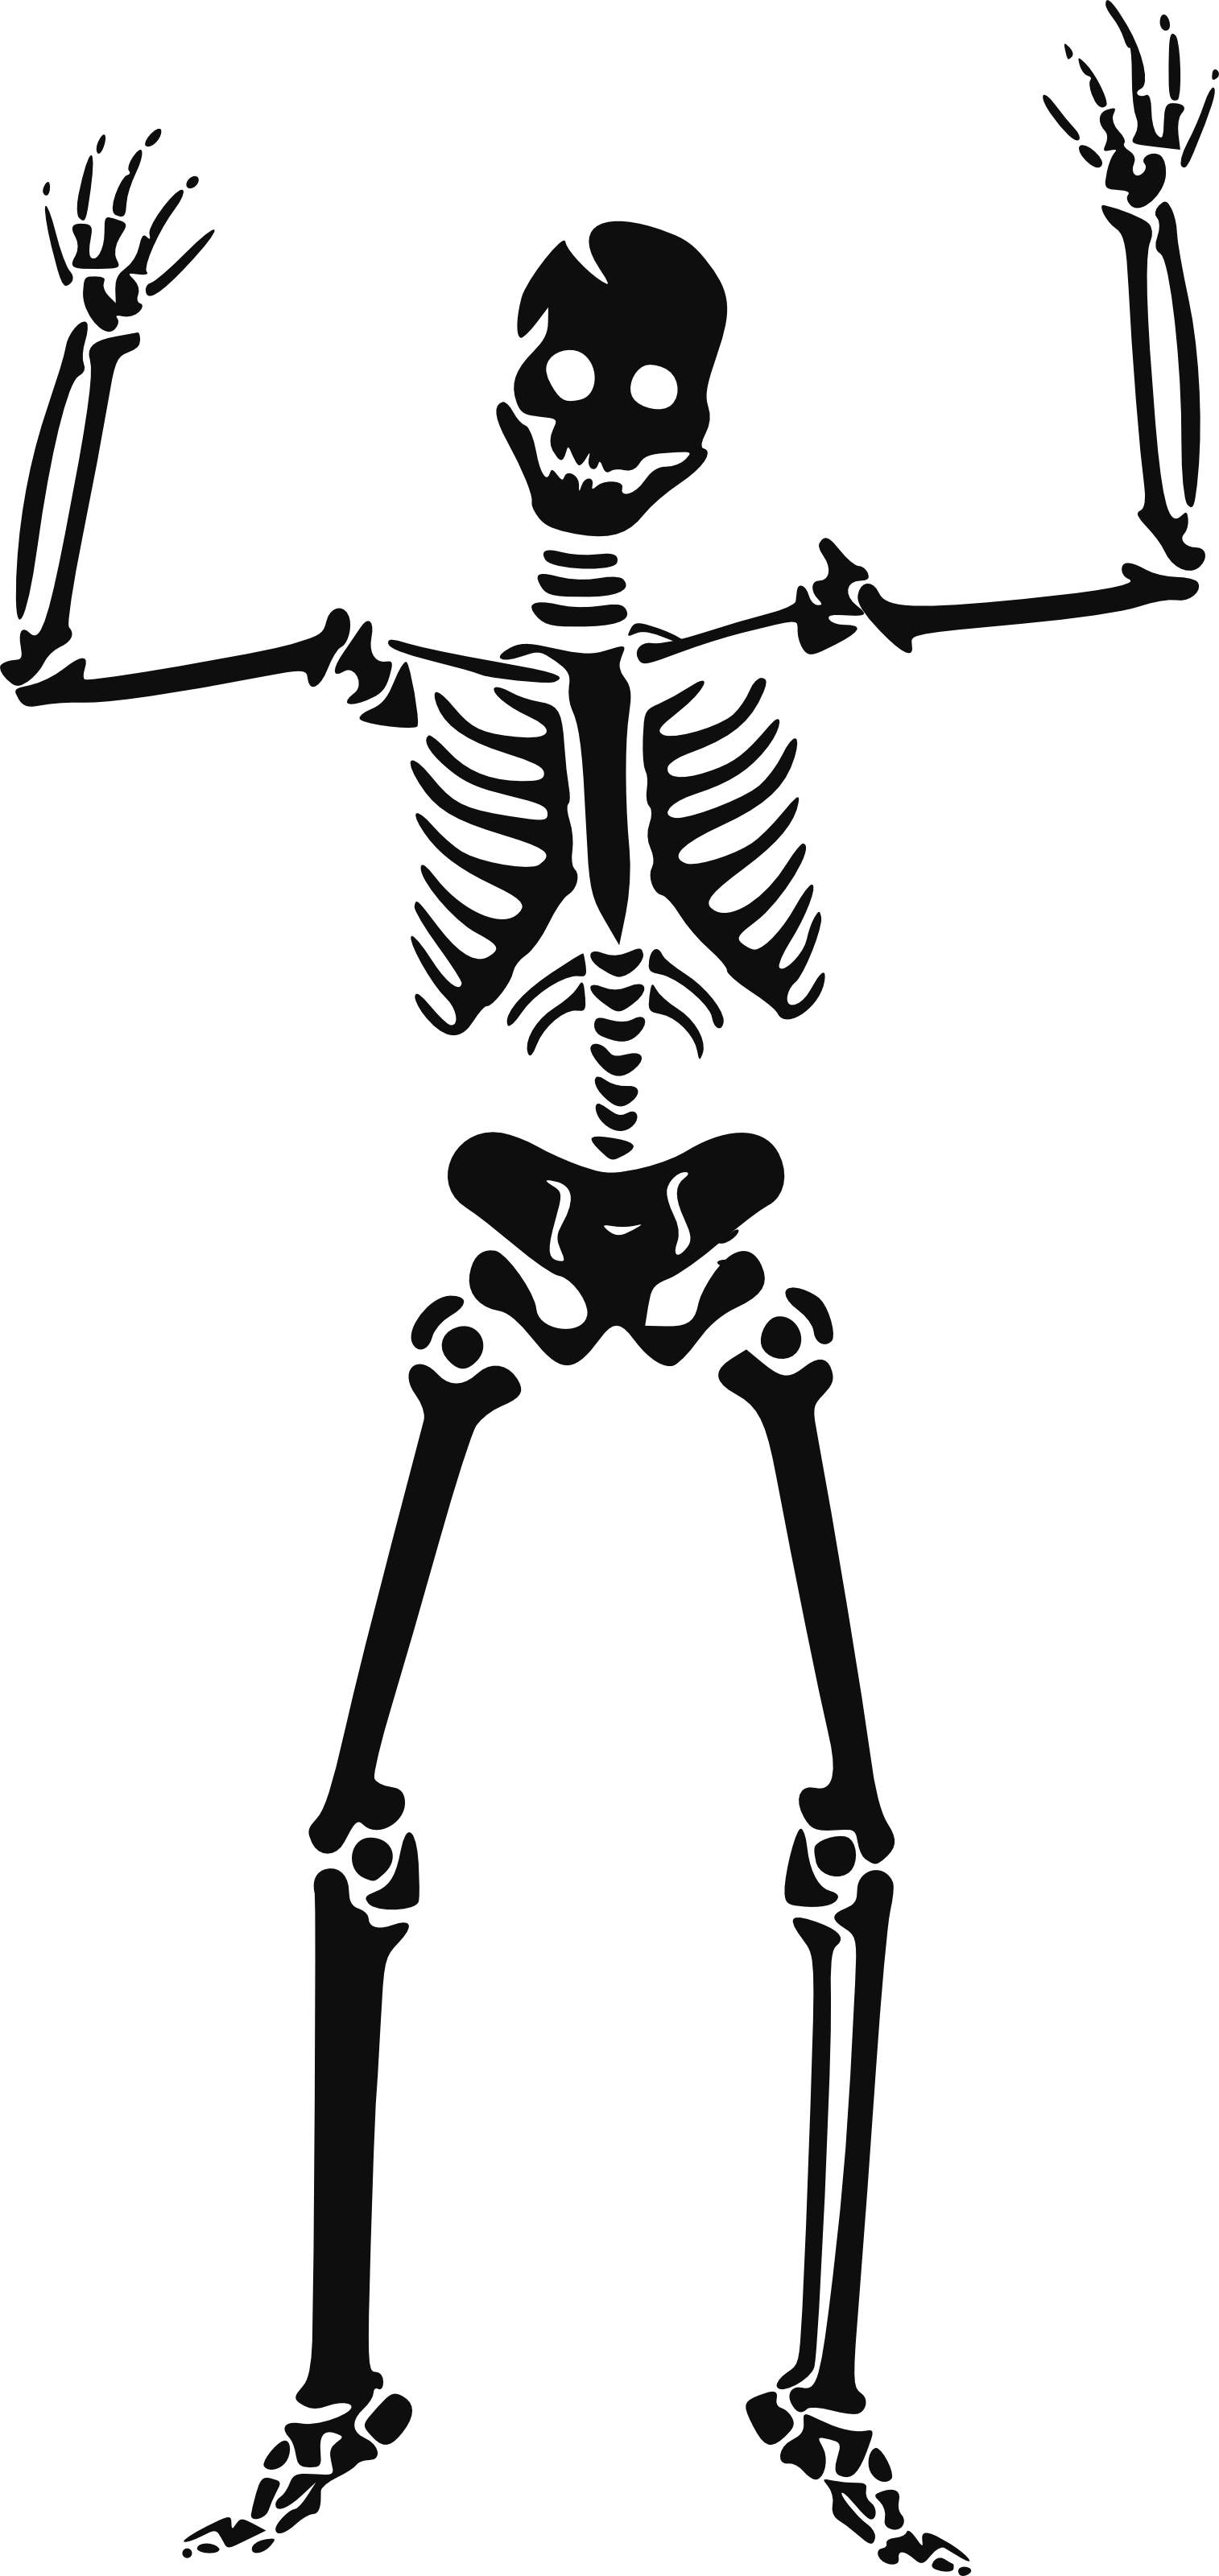 Happy Skeleton - Free Halloween Vector Clipart Illustration